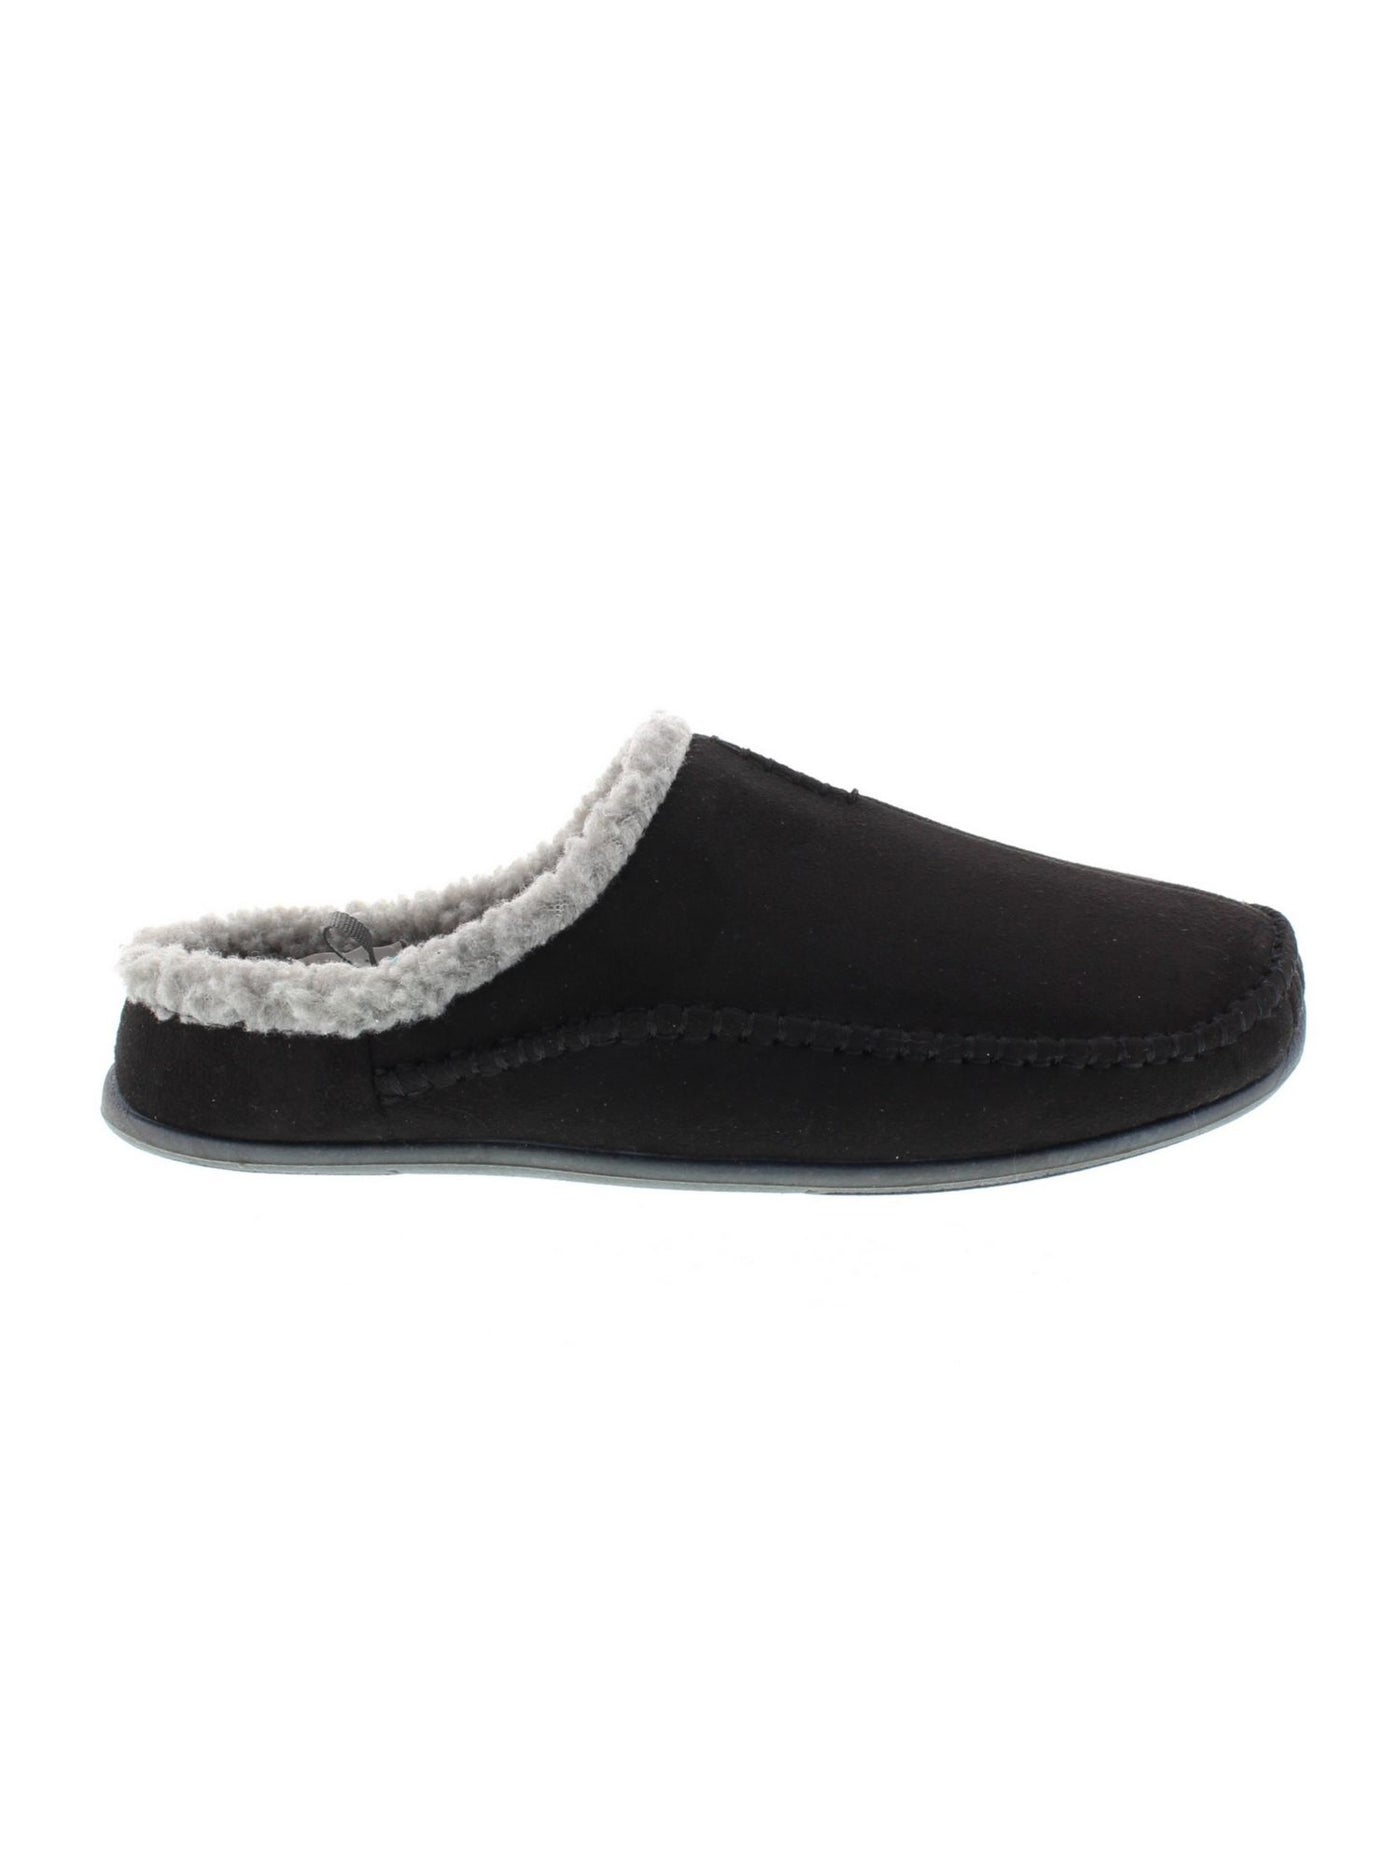 DEER STAGS SLIPPEROOZ Mens Black Padded Nordic Round Toe Slip On Slippers Shoes 7 W